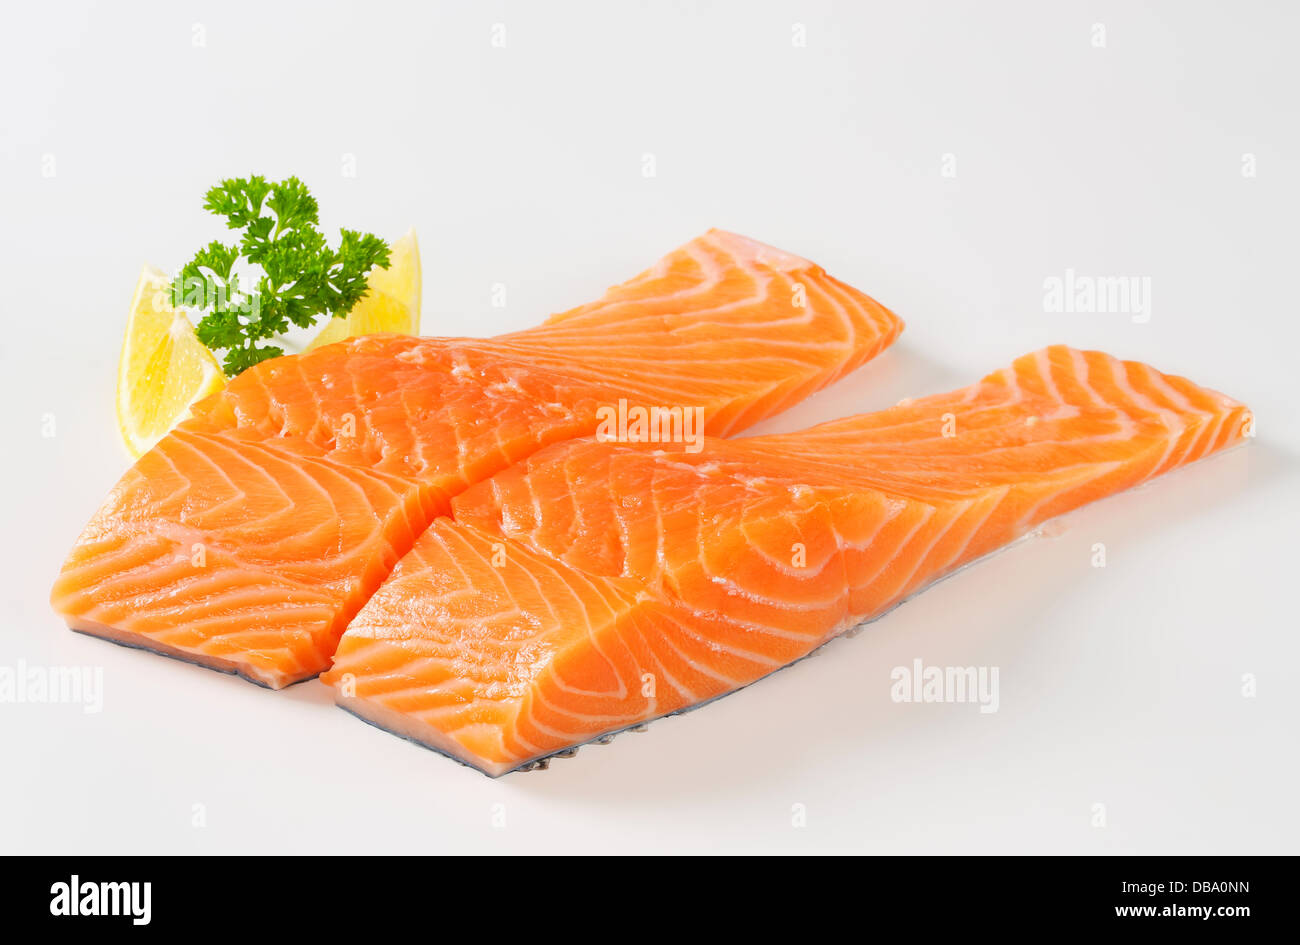 https://c8.alamy.com/comp/DBA0NN/studio-shot-of-raw-salmon-fillets-DBA0NN.jpg